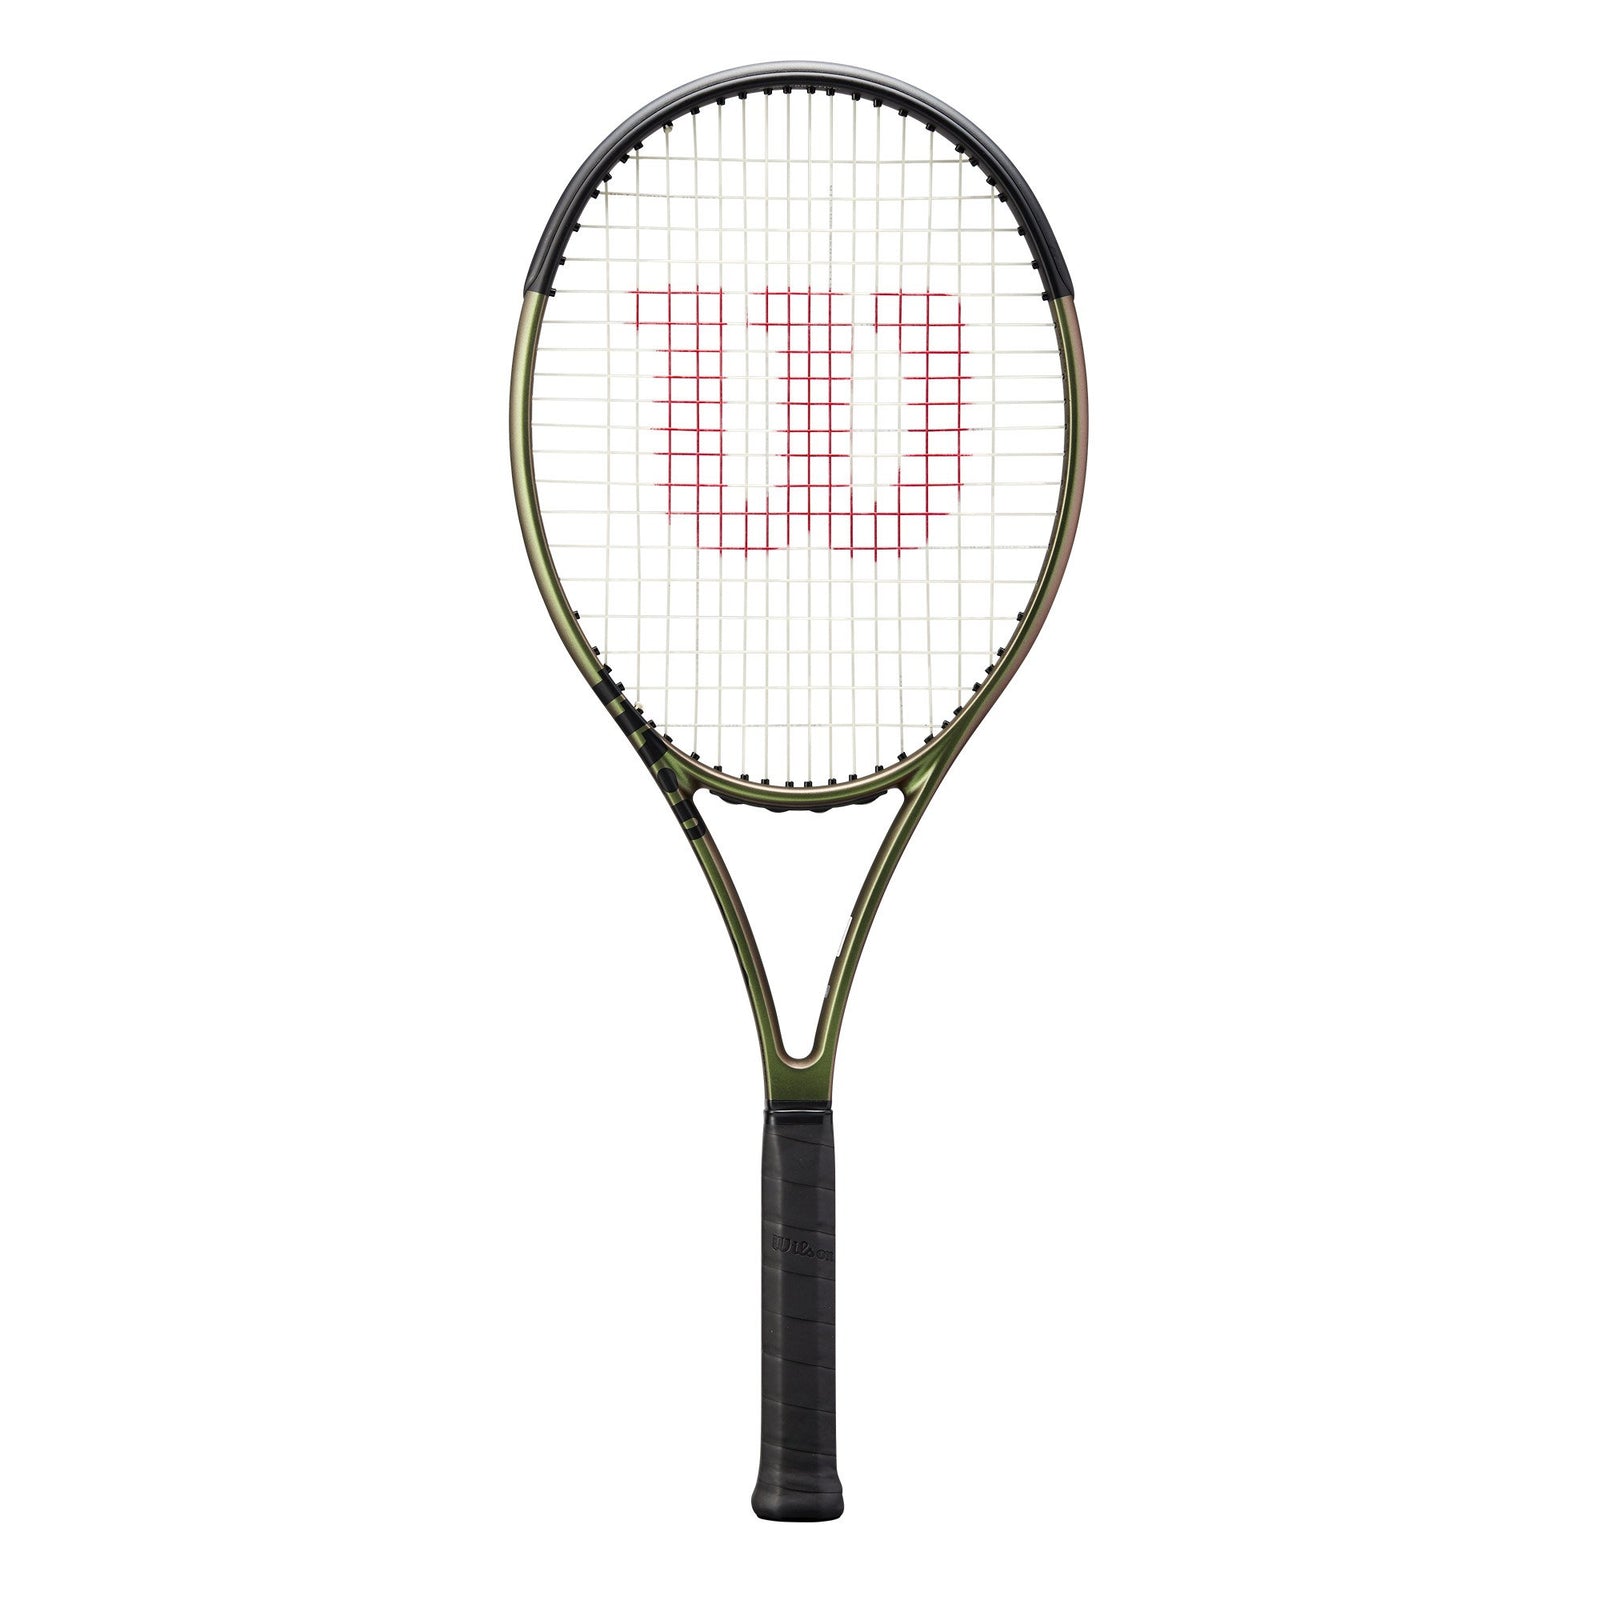 Blade 104 V8 Strung Tennis Racket